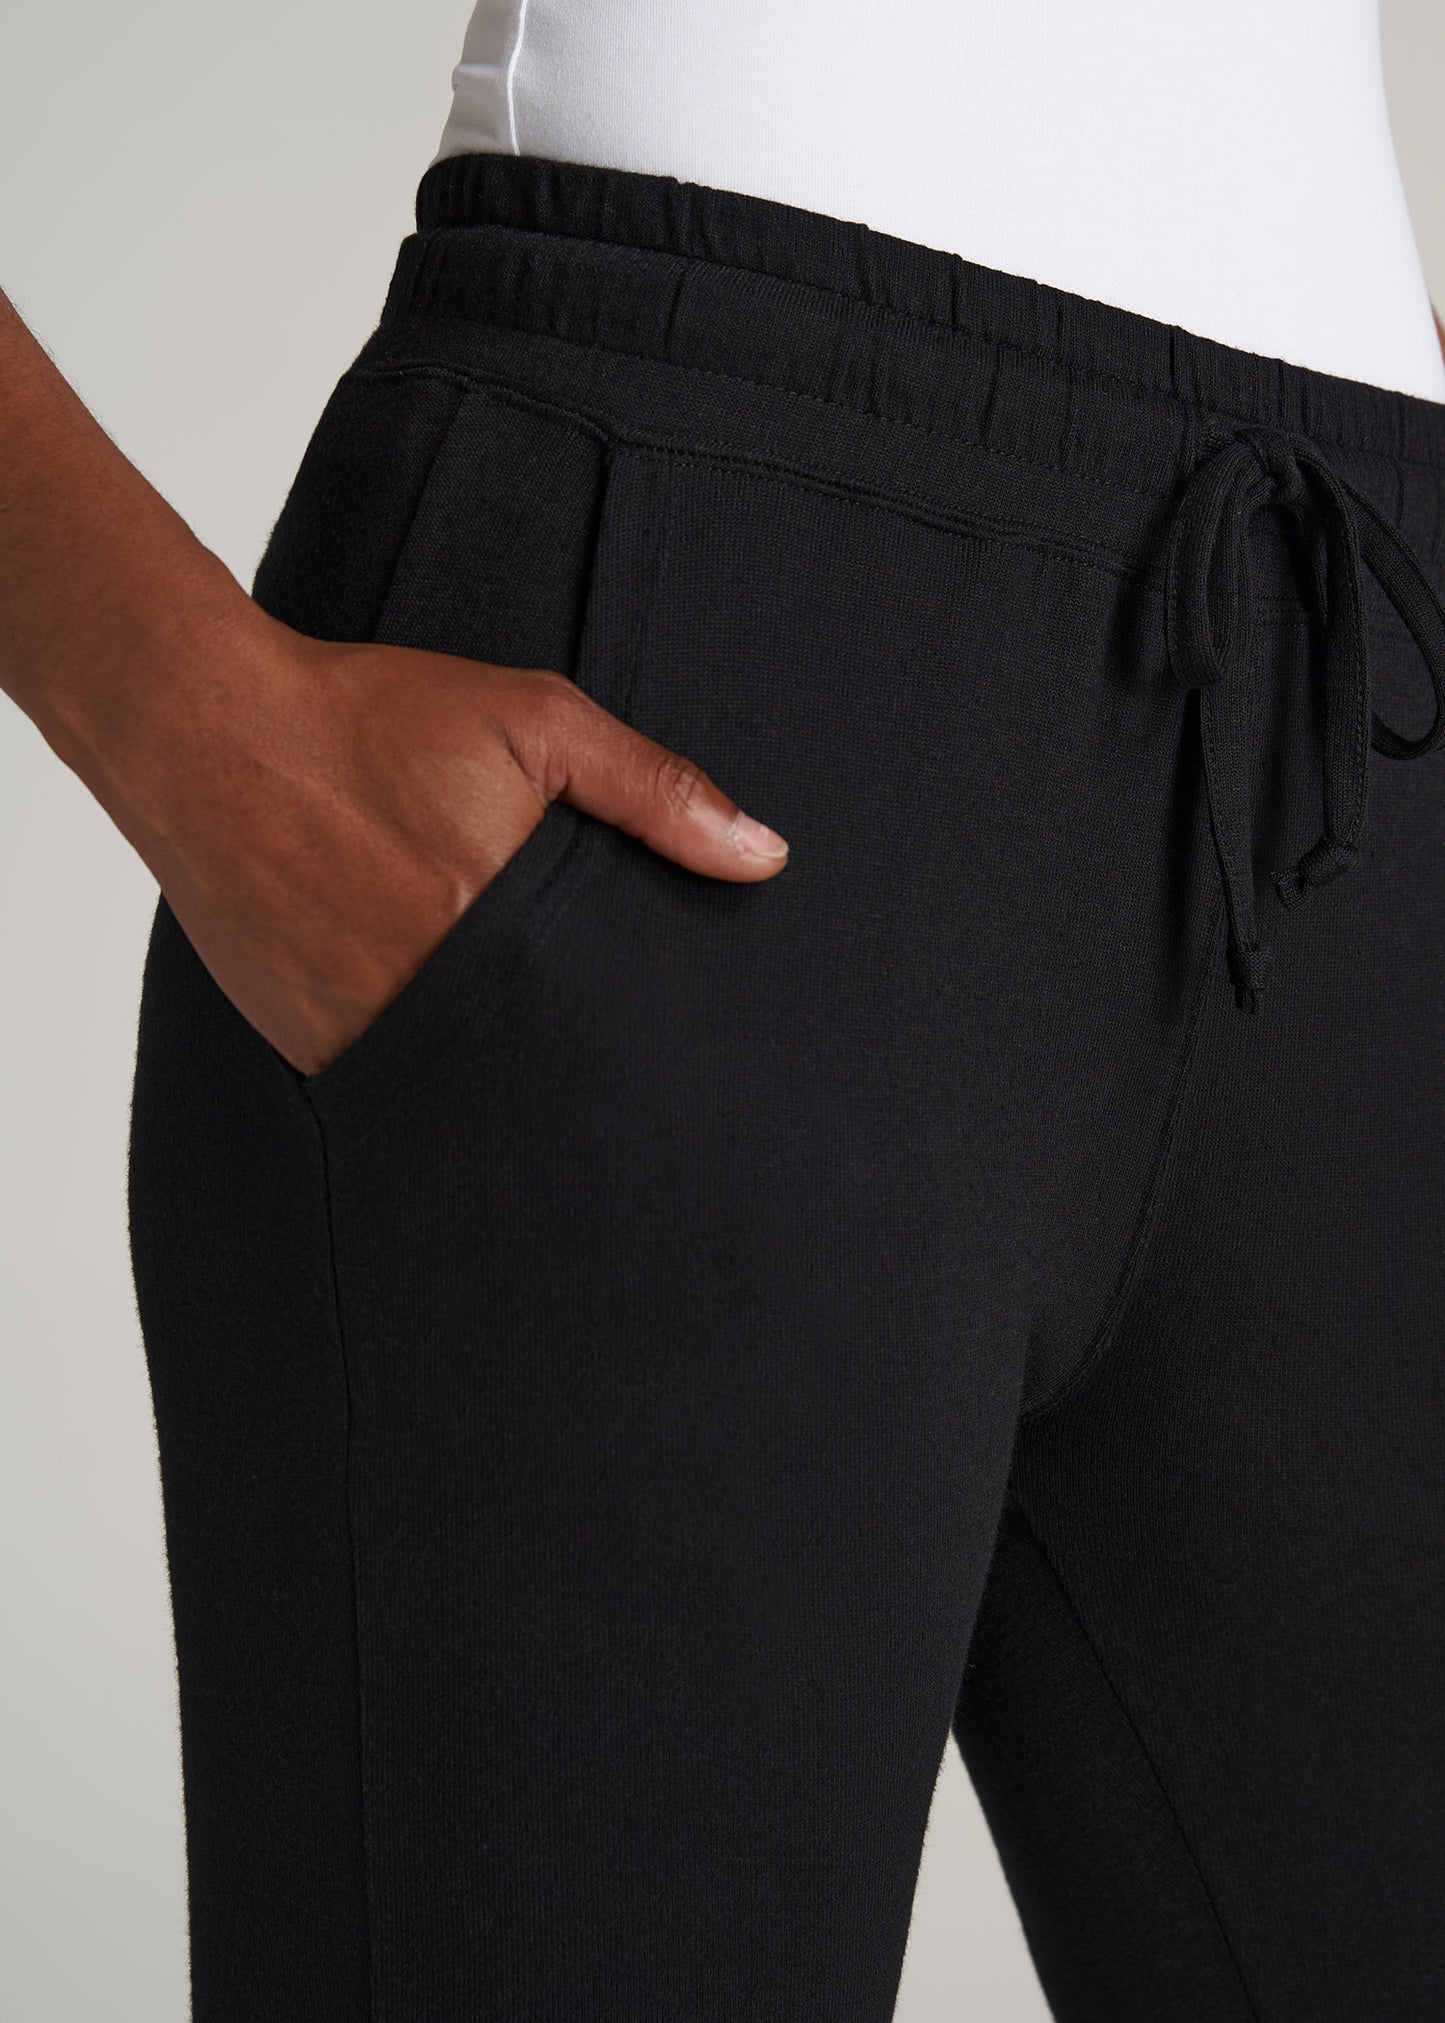 Women's Tall Lounge Pant Open Bottom Charcoal